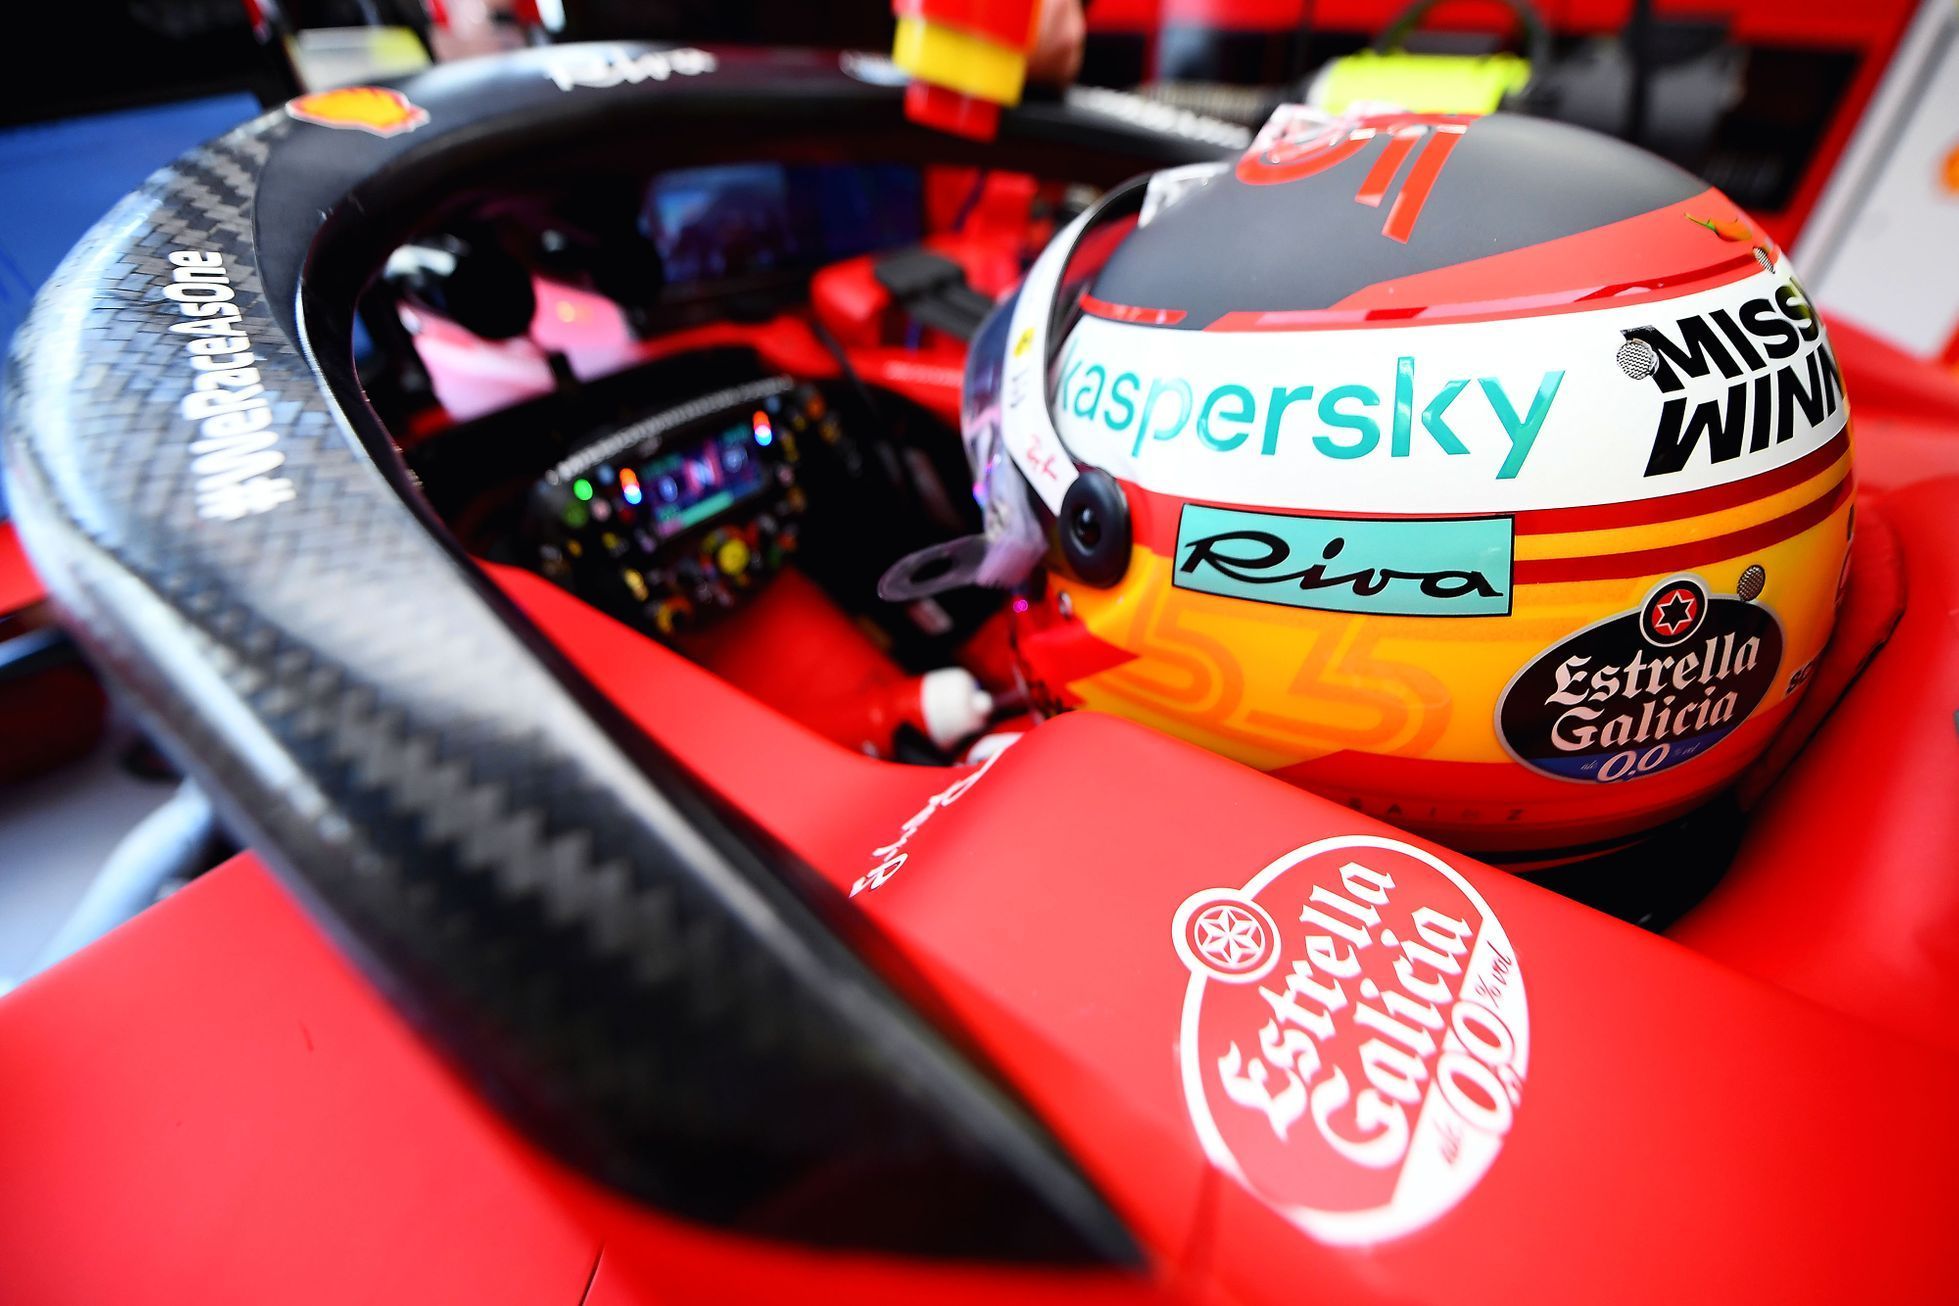 Testy F1 v Bahrajnu 2021: Carlos Sainz junior, Ferrari